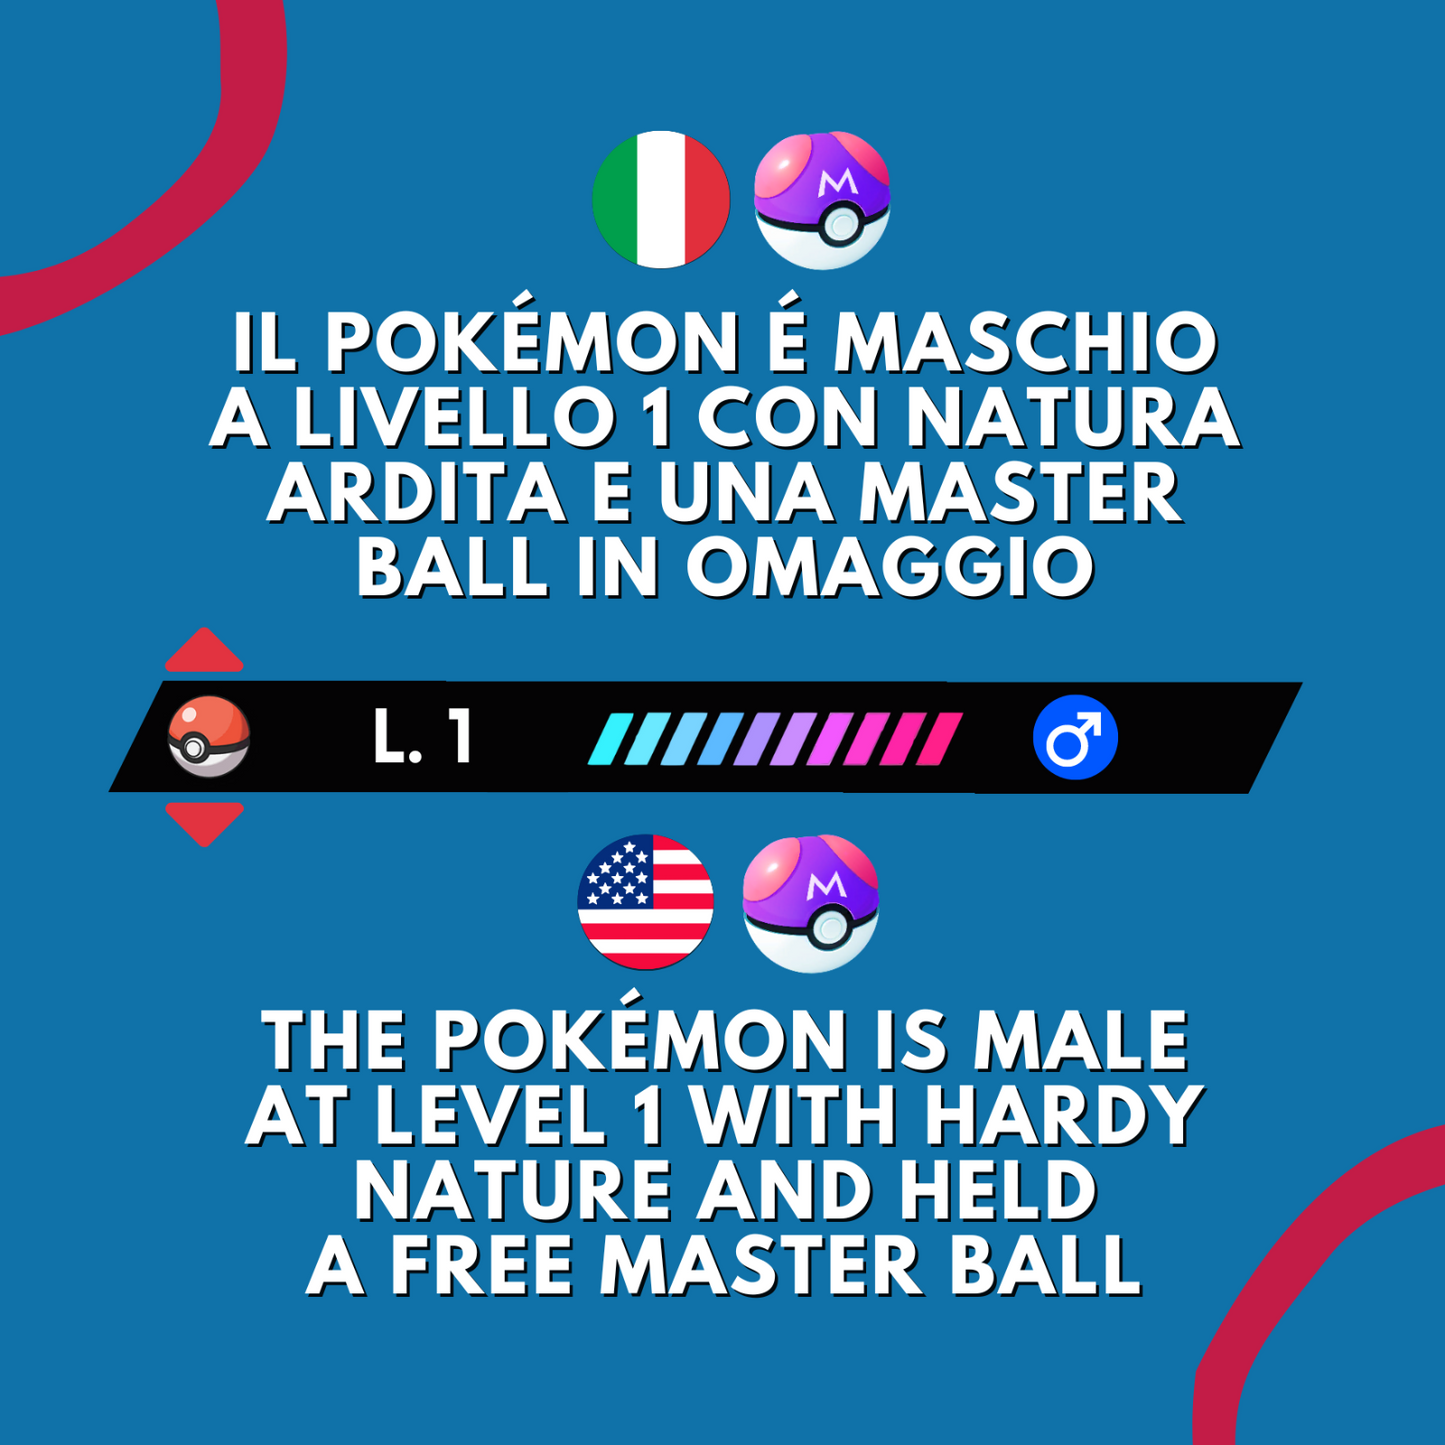 Minccino Shiny o Non 6 IV e Master Ball Legit Pokemon Spada Scudo Sword Shield